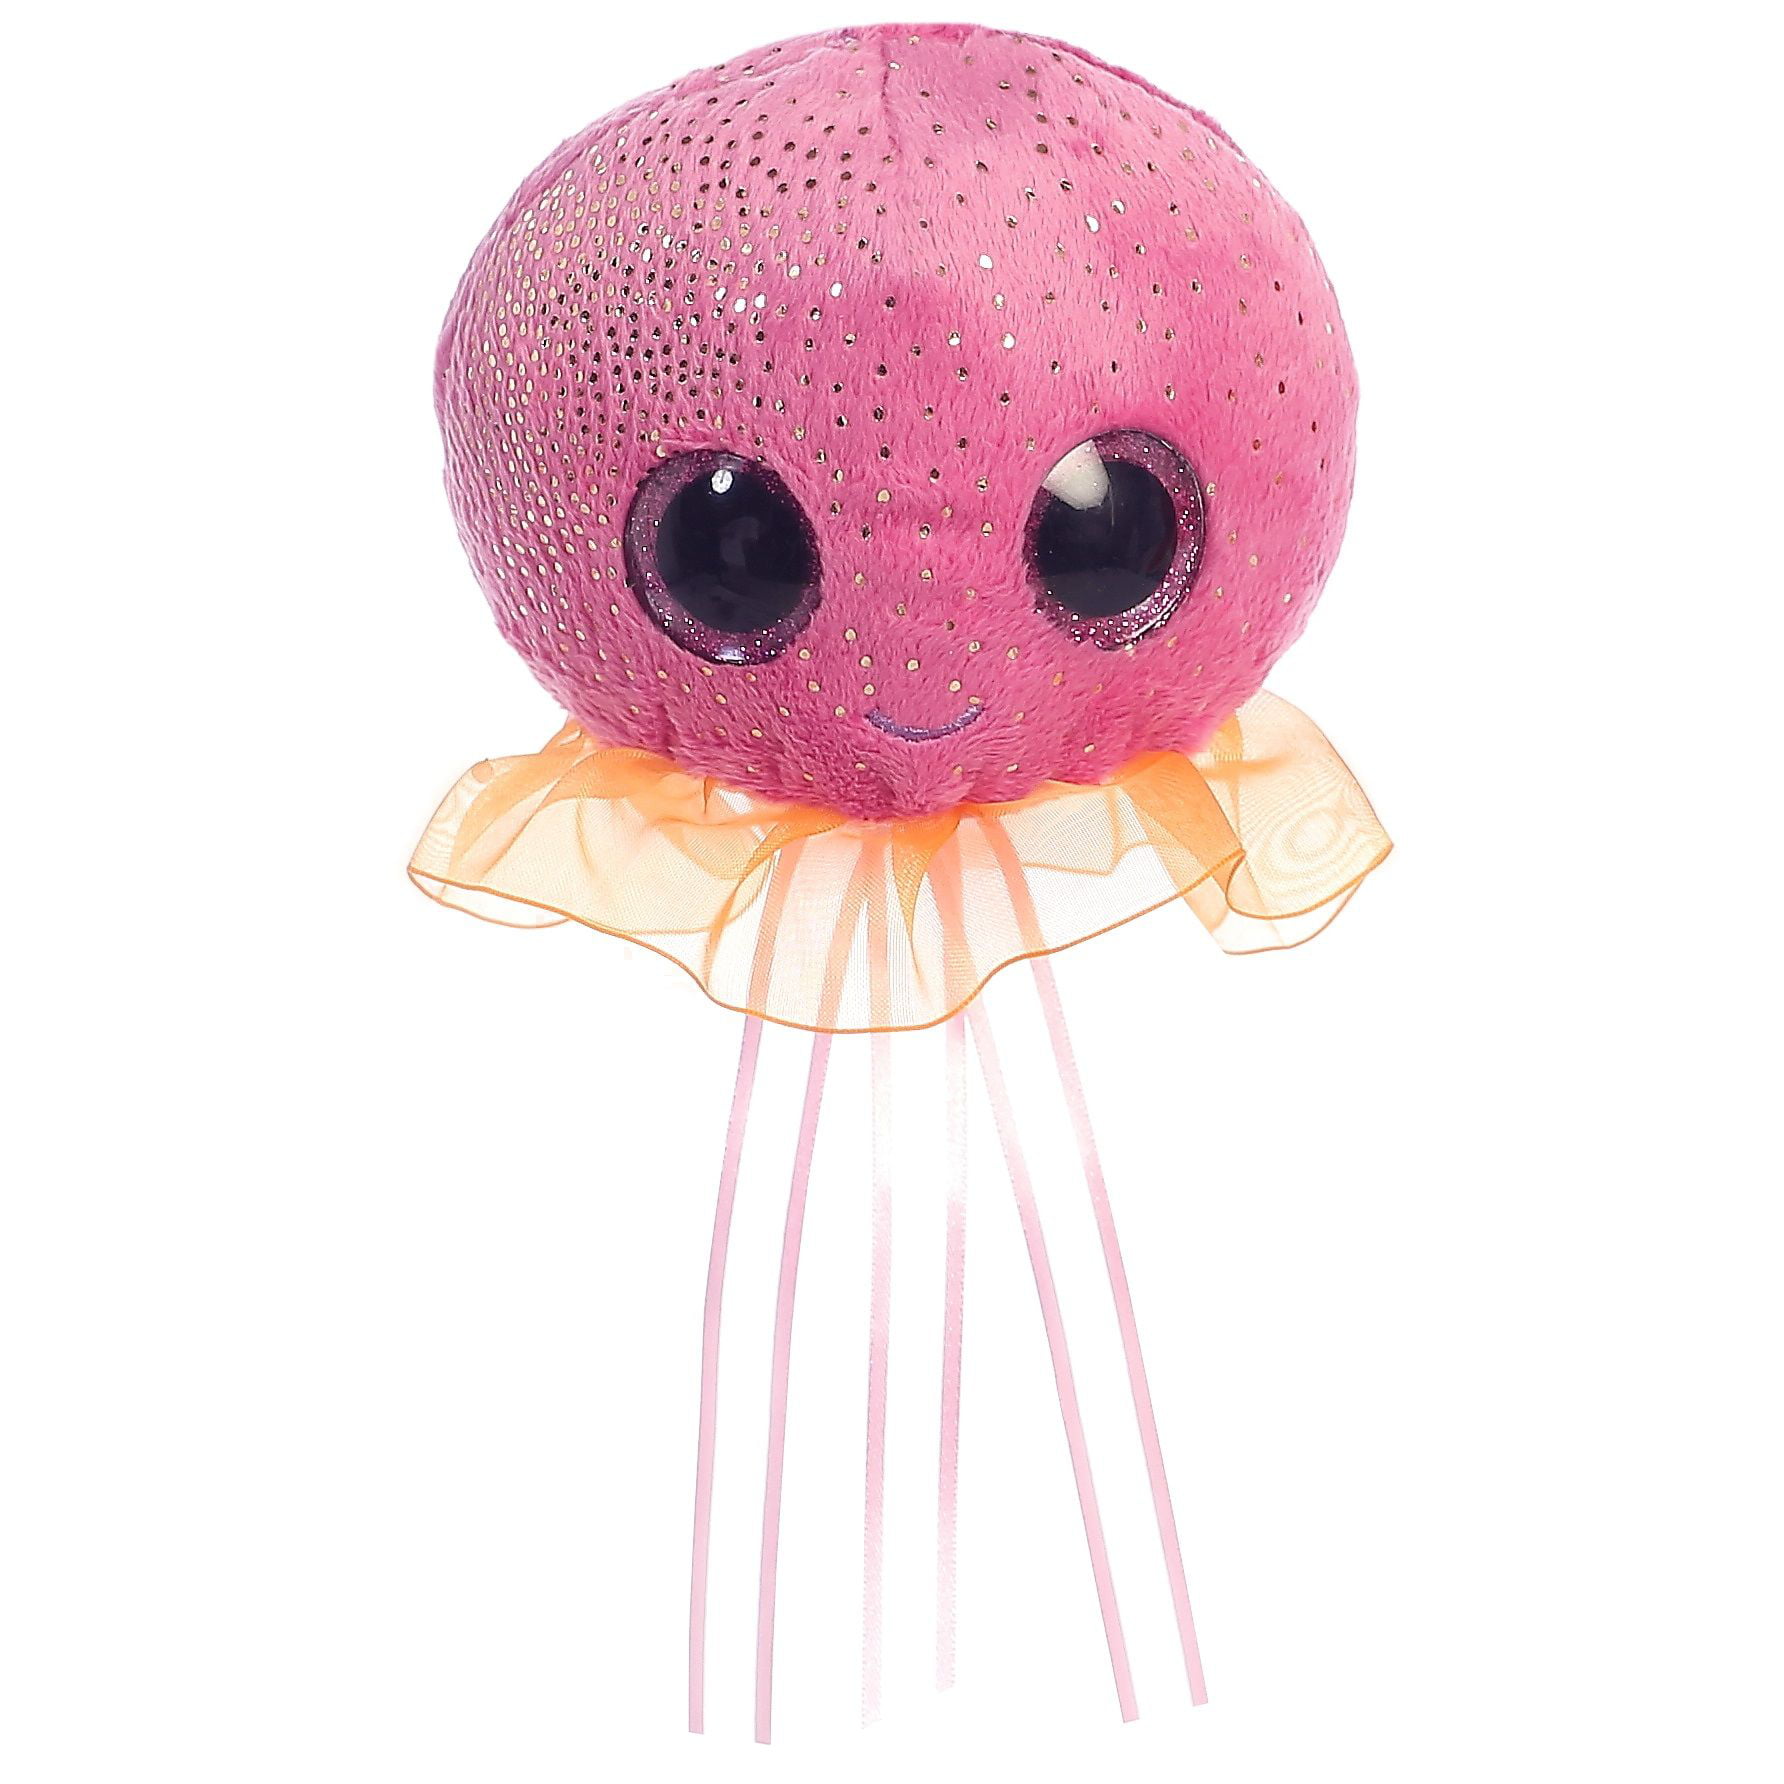 Jellie Jellyfish Yoohoo 5 inch - Stuffed Animal by Aurora Plush (29205